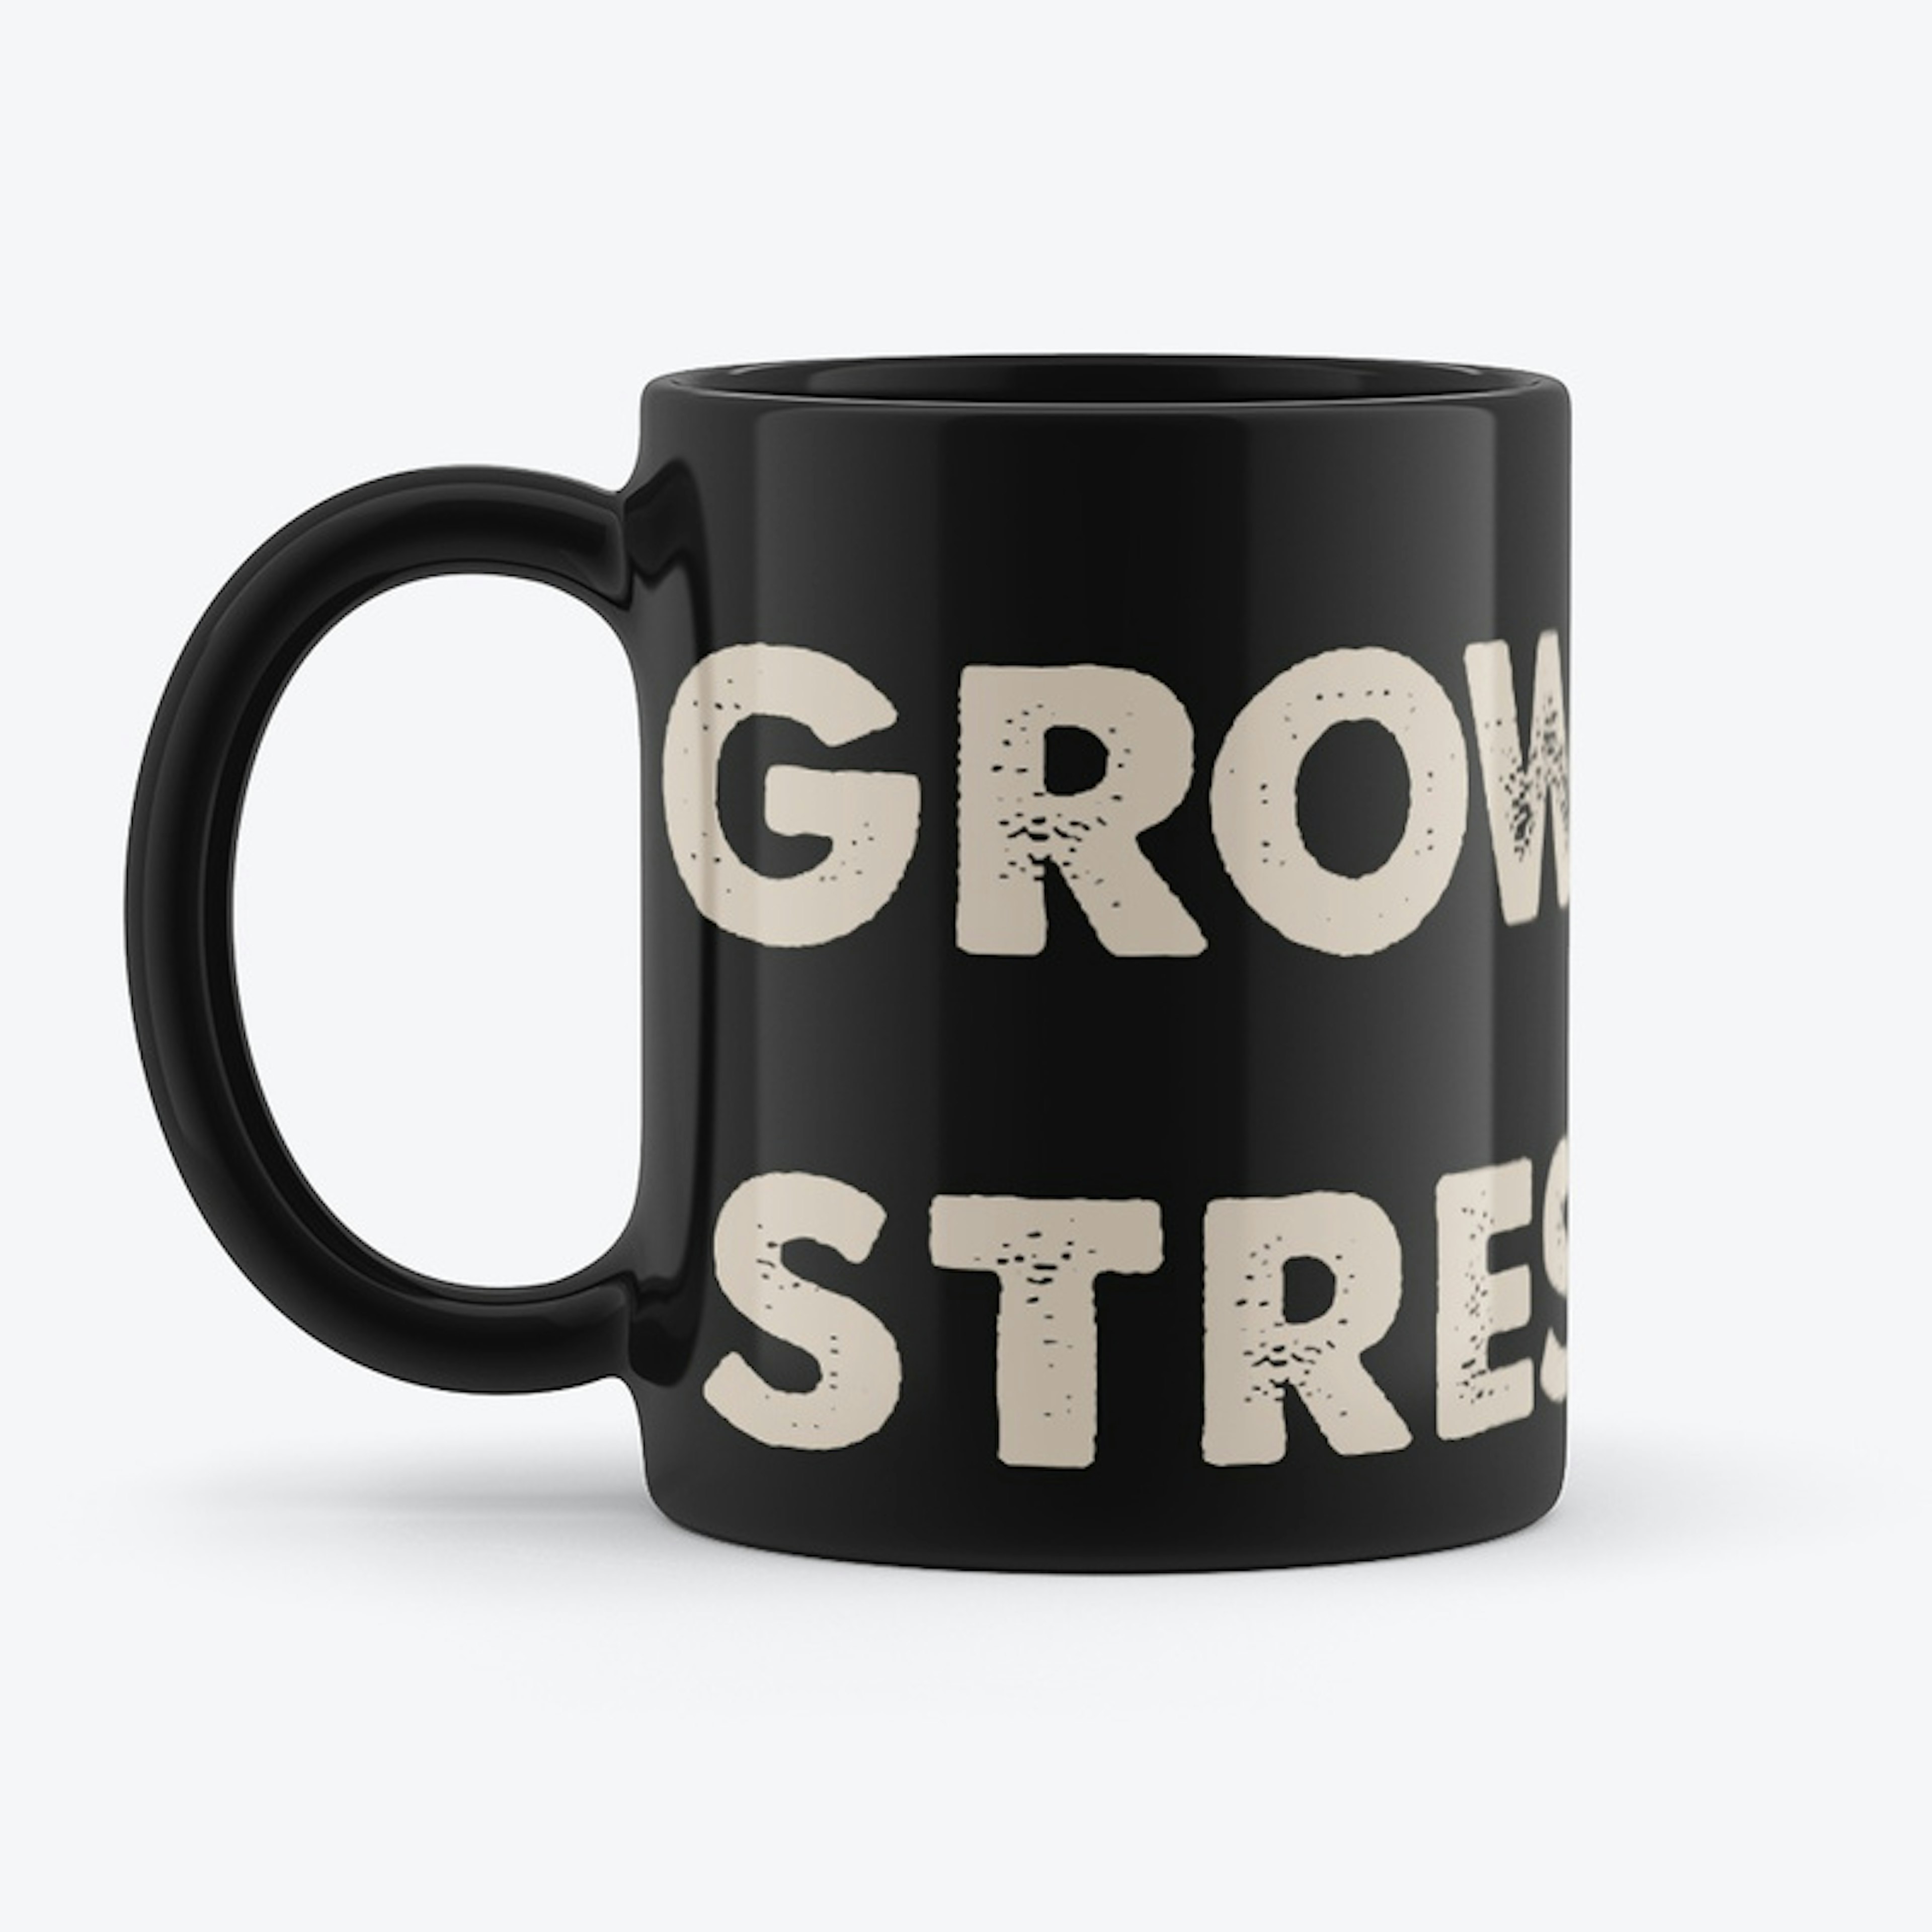 Grow More, Stress Less